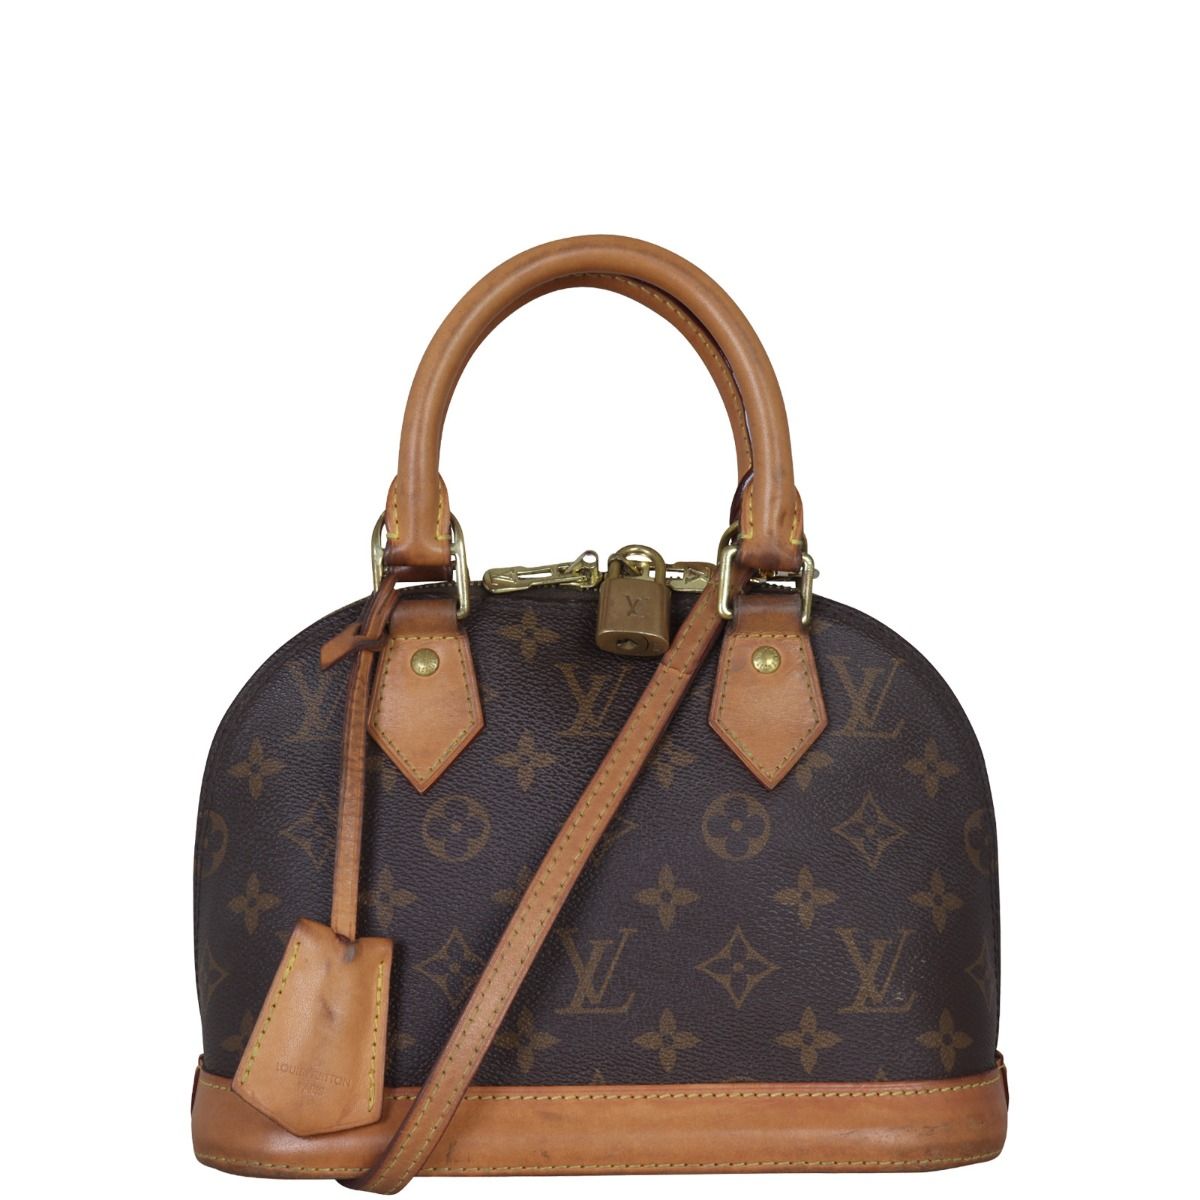 Louis Vuitton Alma Small Model Handbag in Brown Monogram Canvas